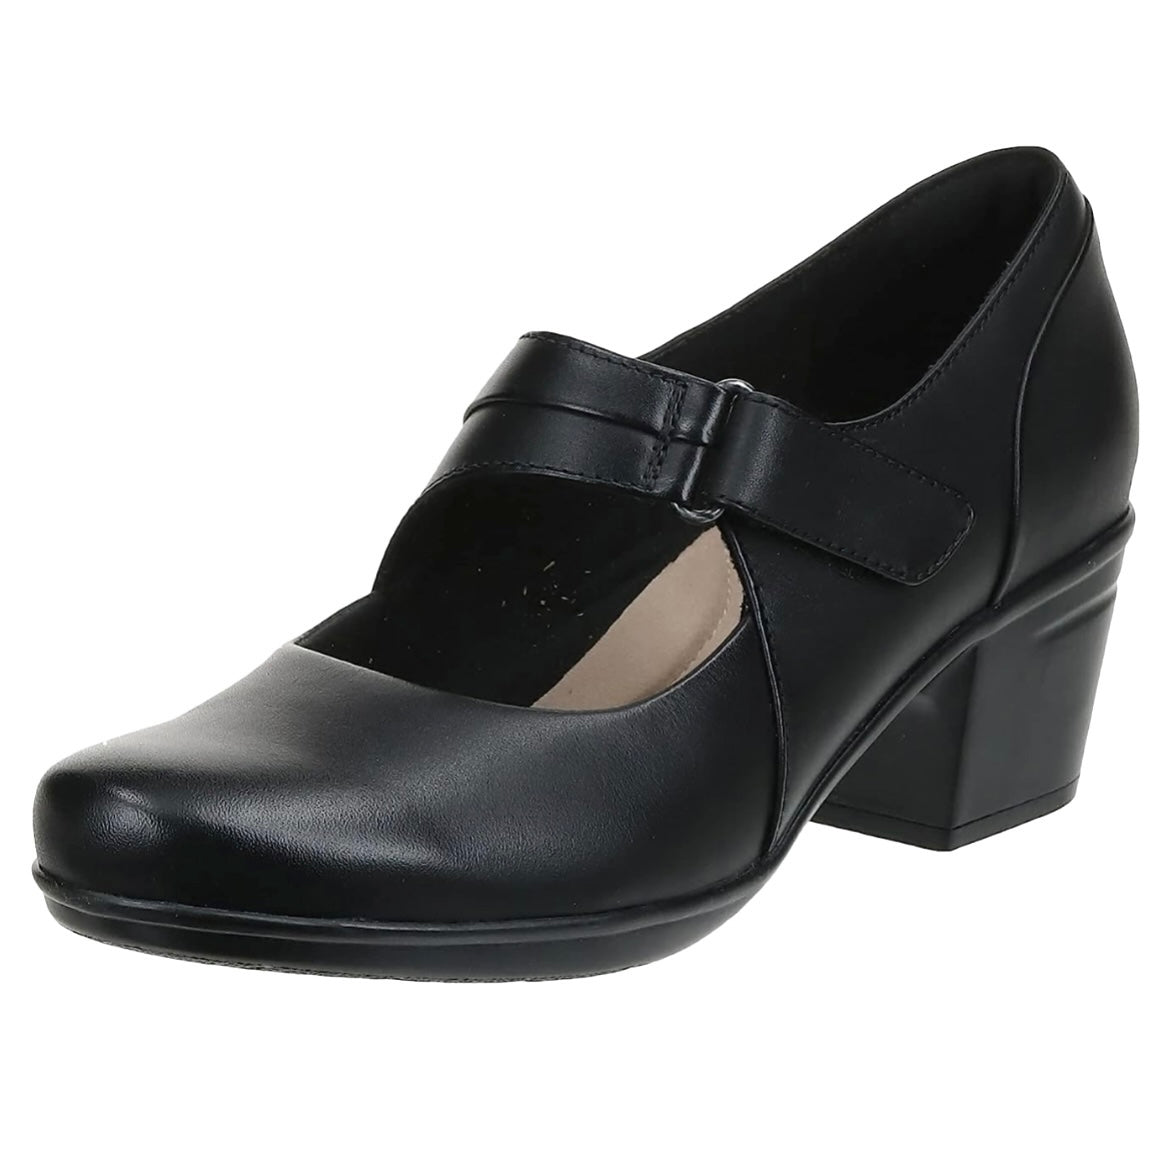 Women's EMSLIE LULIN Mary Jane Black Pumps Shoes